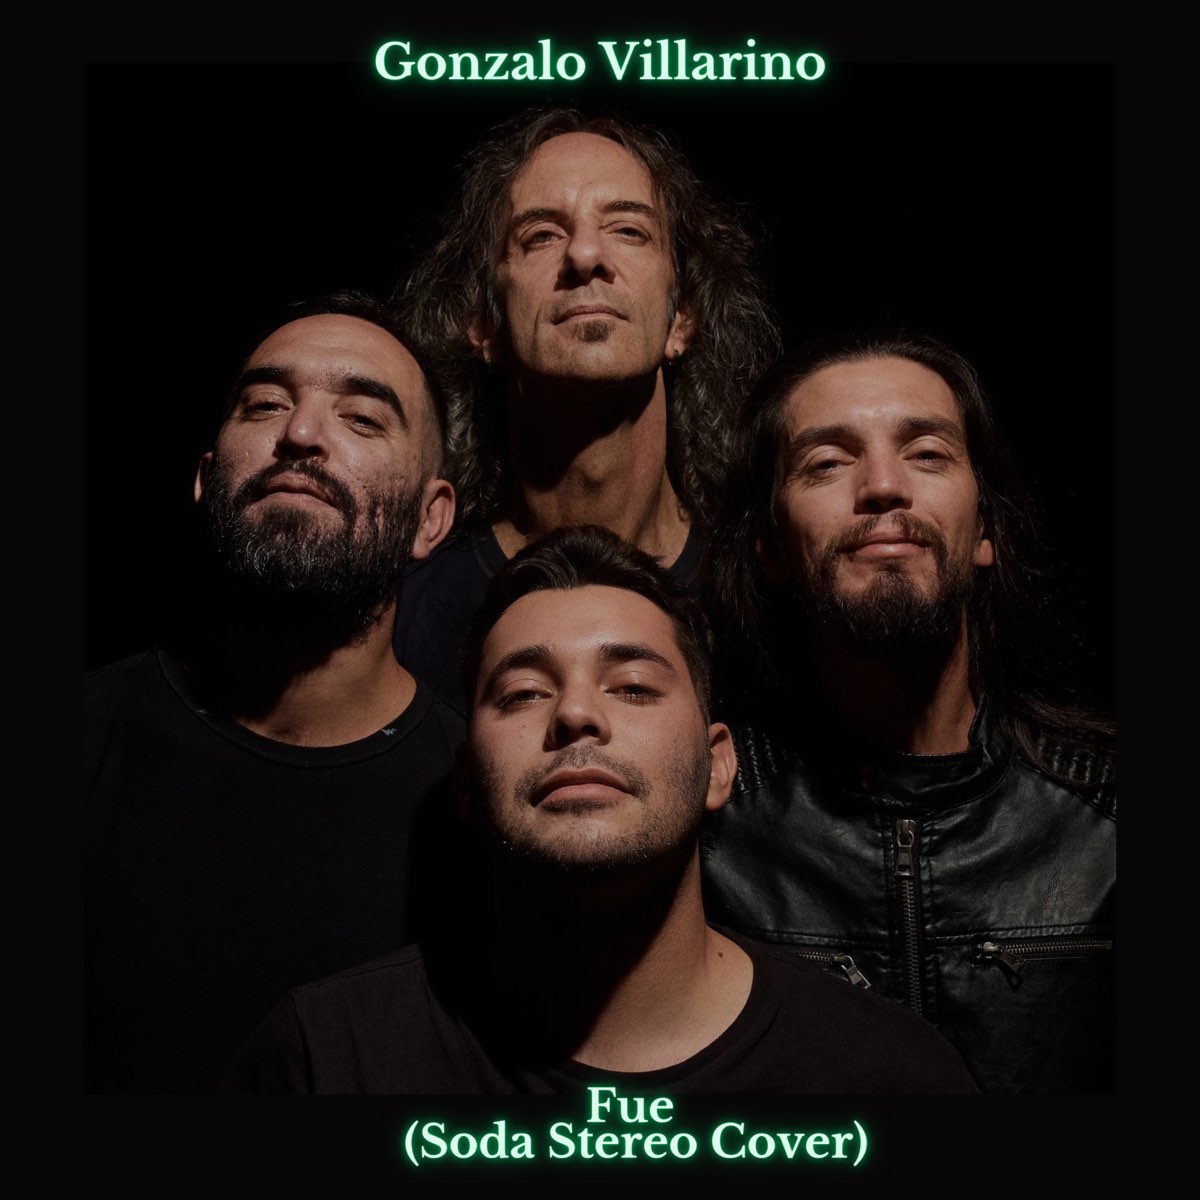 Fue (Soda Stereo Cover) - Single de Gonzalo Villarino en Apple Music